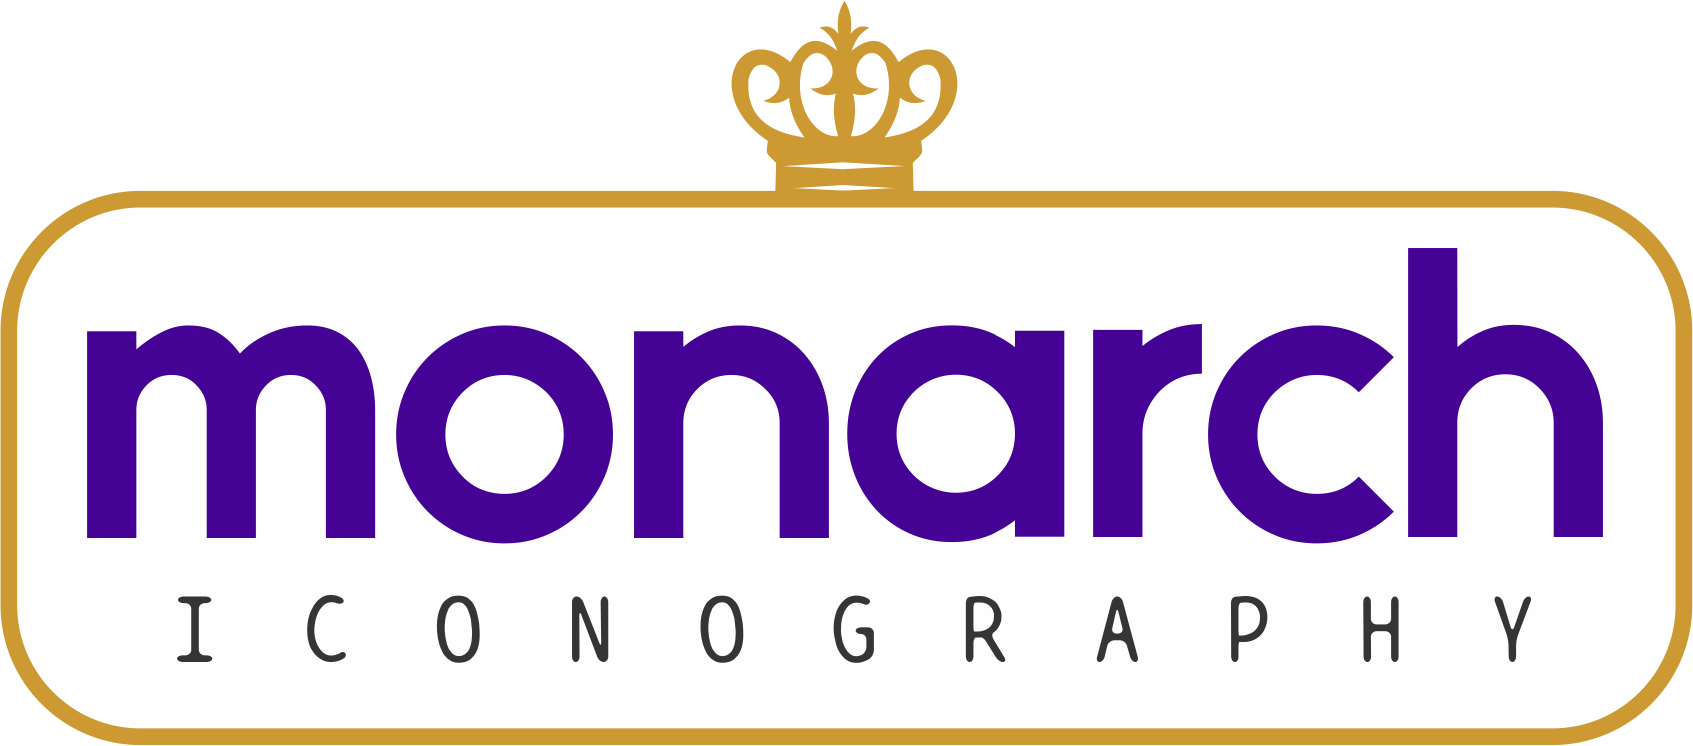 Monarch Iconography Studio